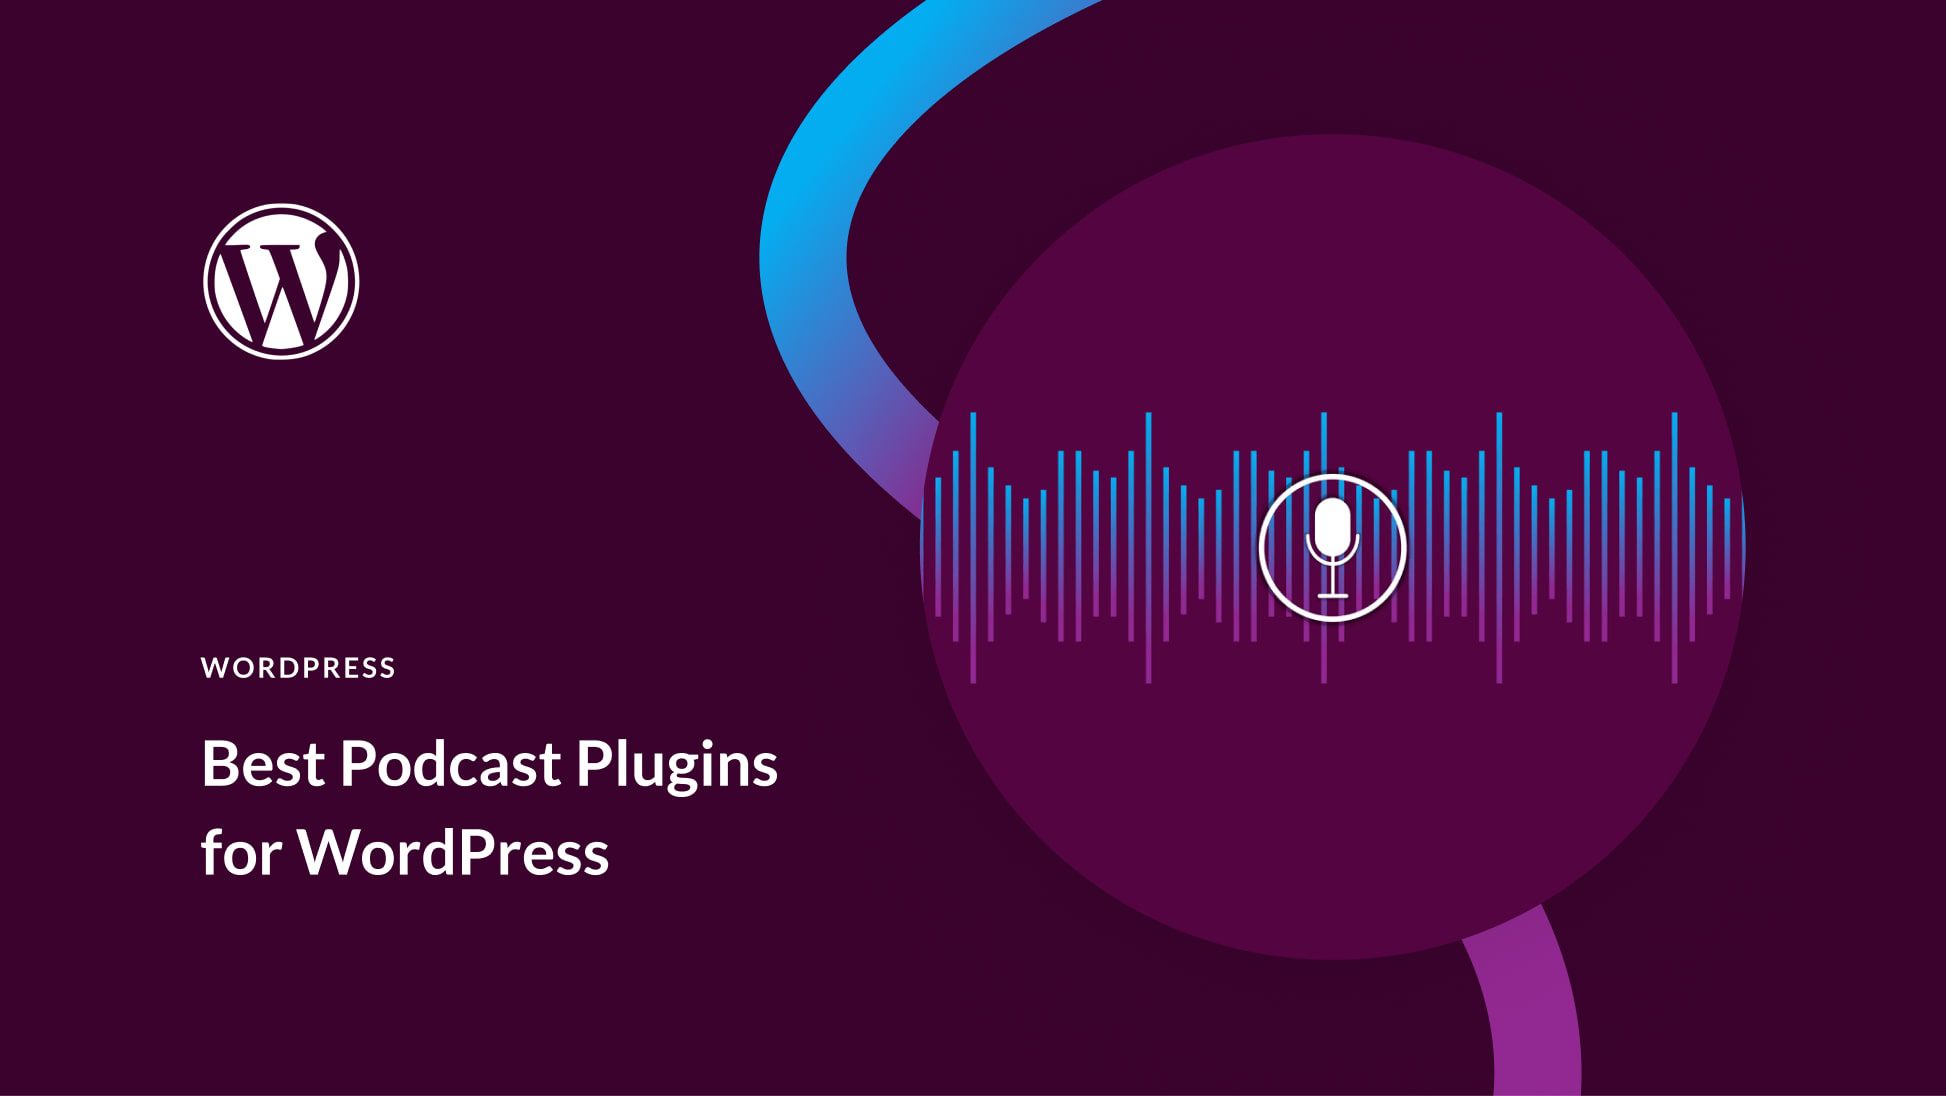 5 Best WordPress Podcast Plugins in 2023